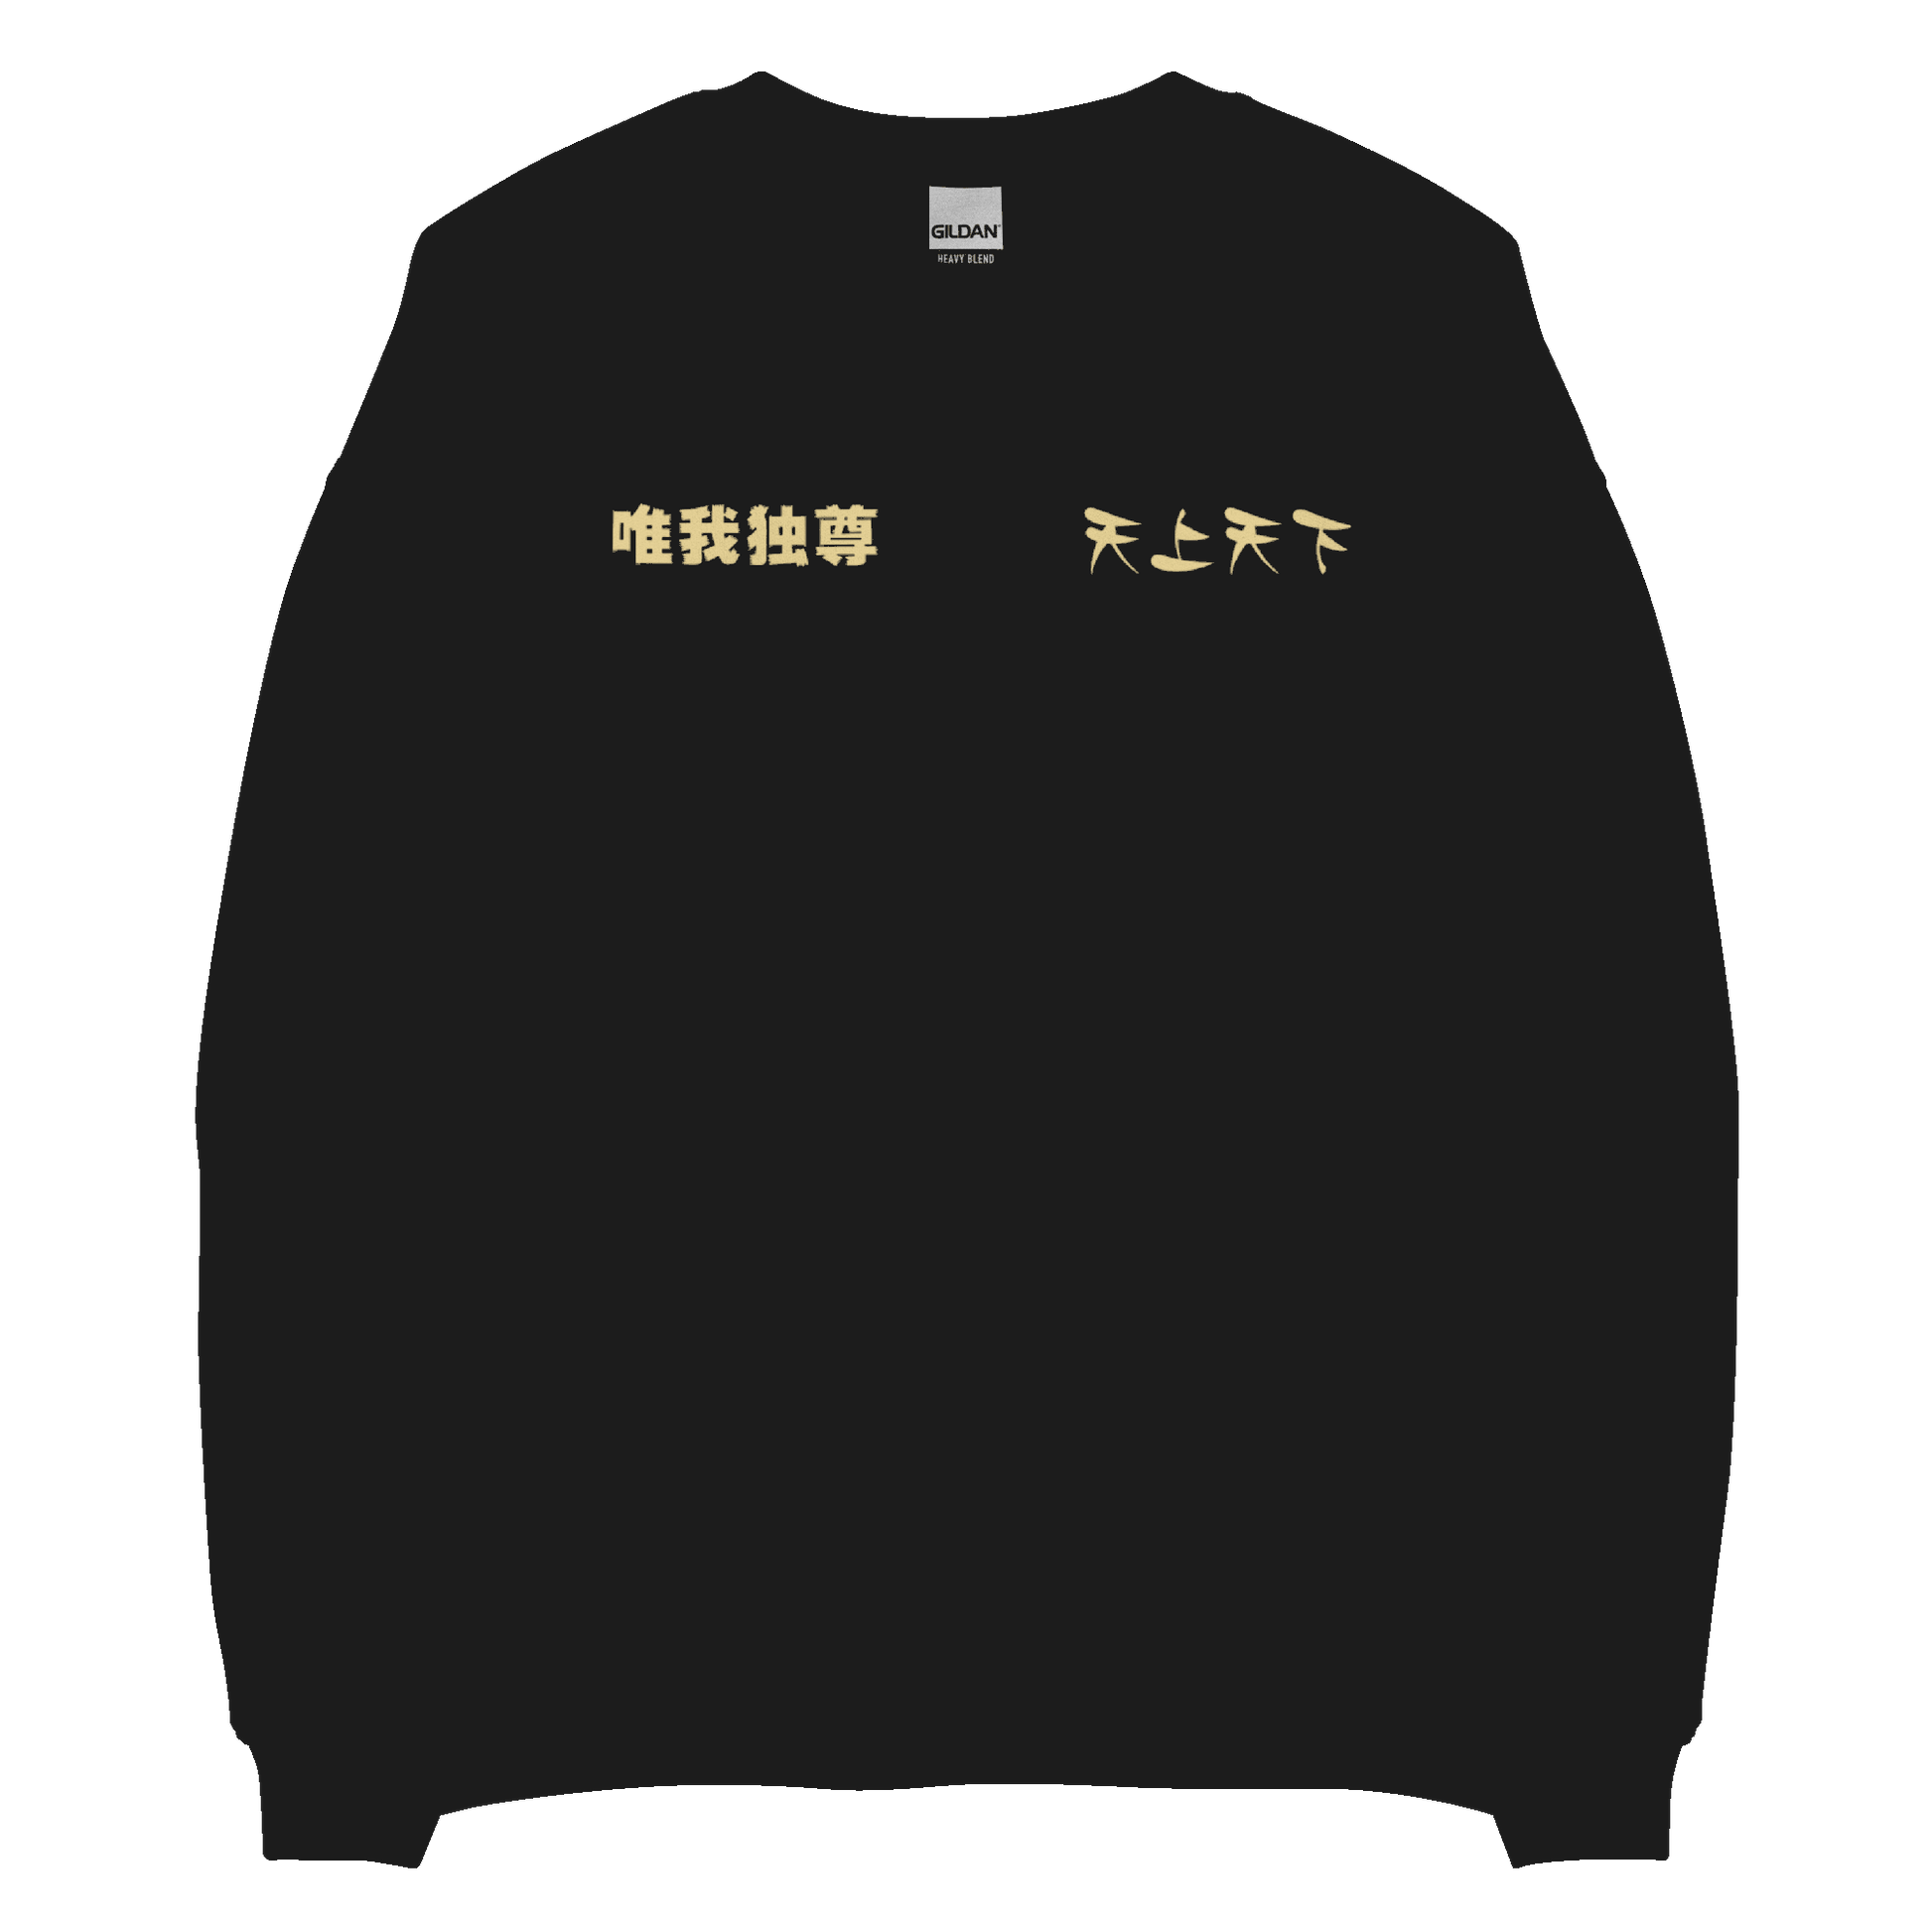 Amhype Tokyo Revengers gang uniform sweatshirt